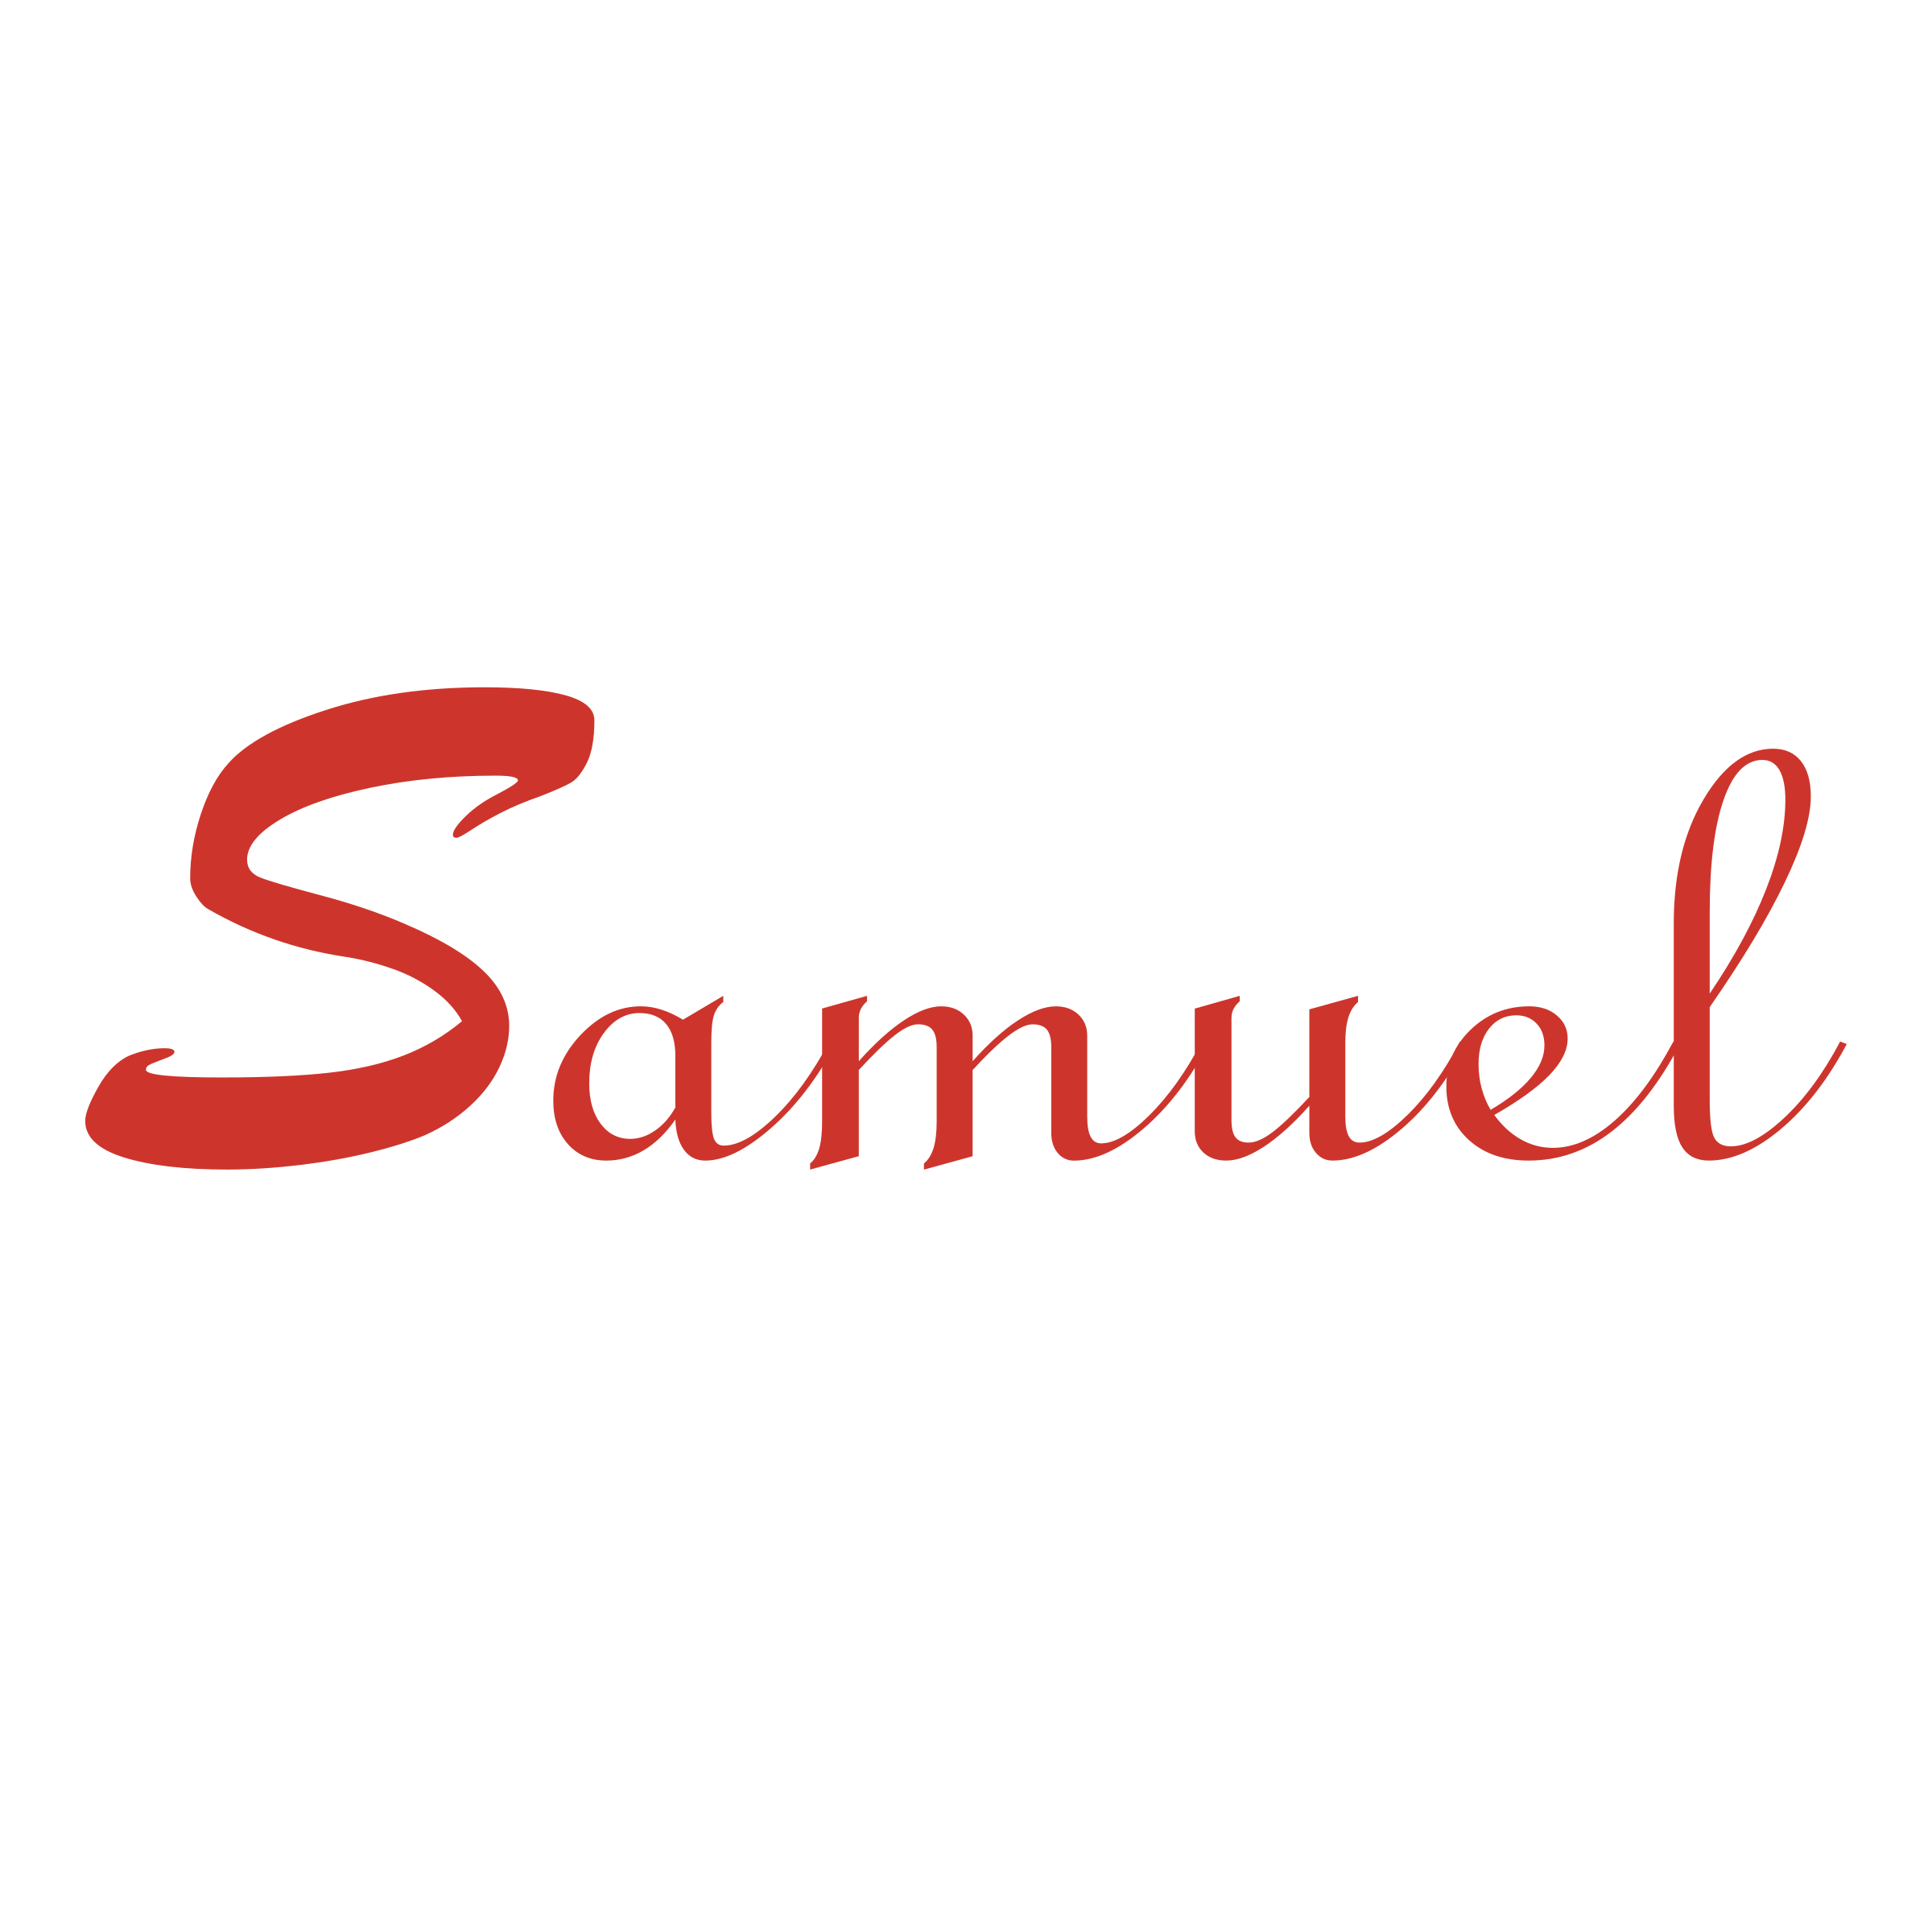 Samuel Logo - Samuel Logo PNG Transparent & SVG Vector - Freebie Supply